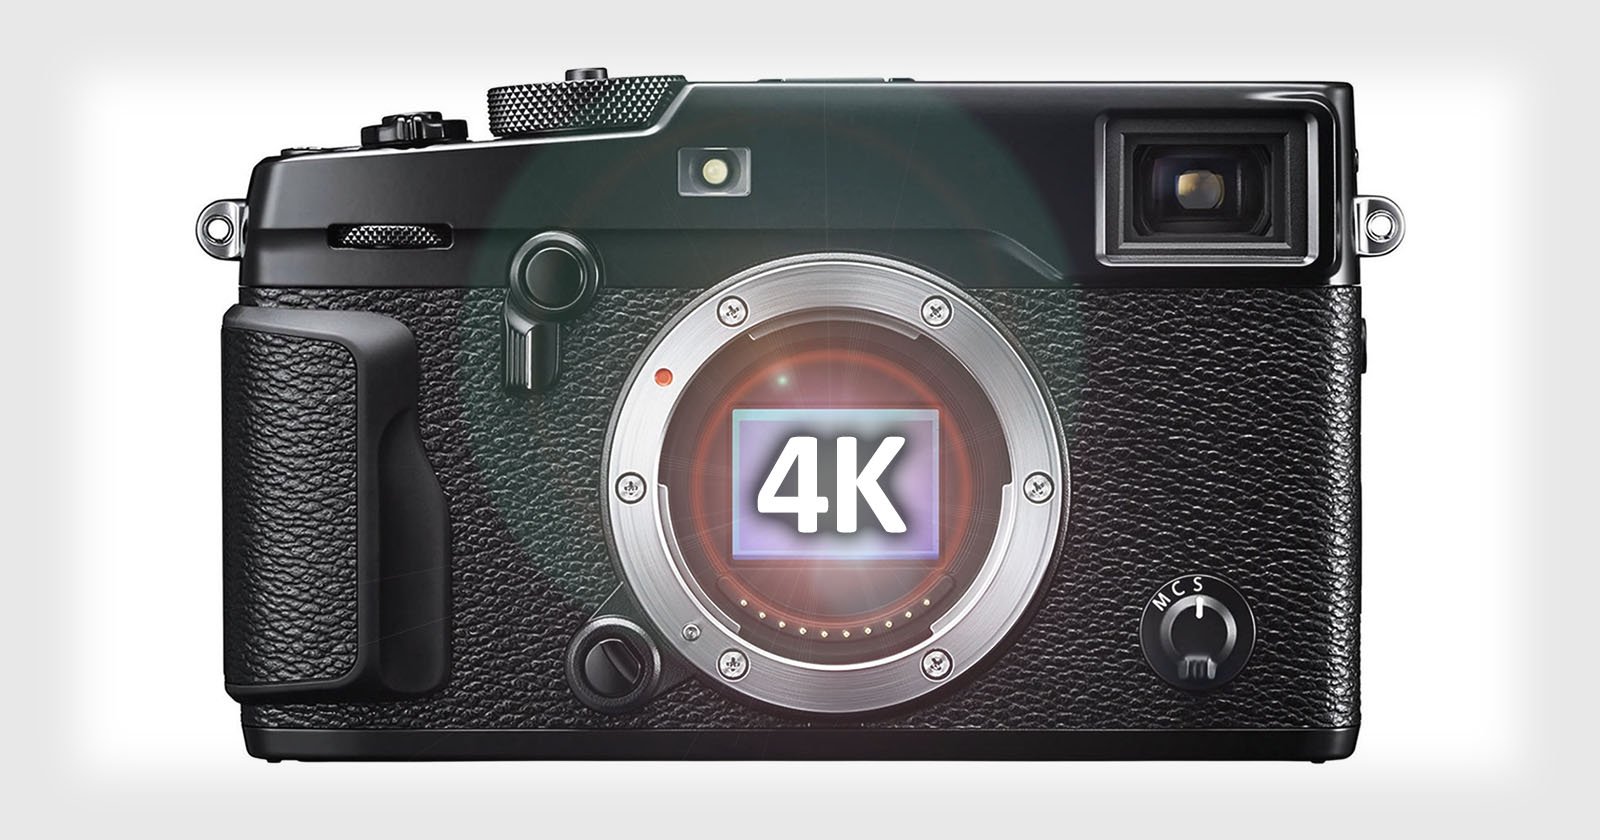 Fujifilm X-Pro2 to Get 4K Video via a Kaizen Firmware Update: Report